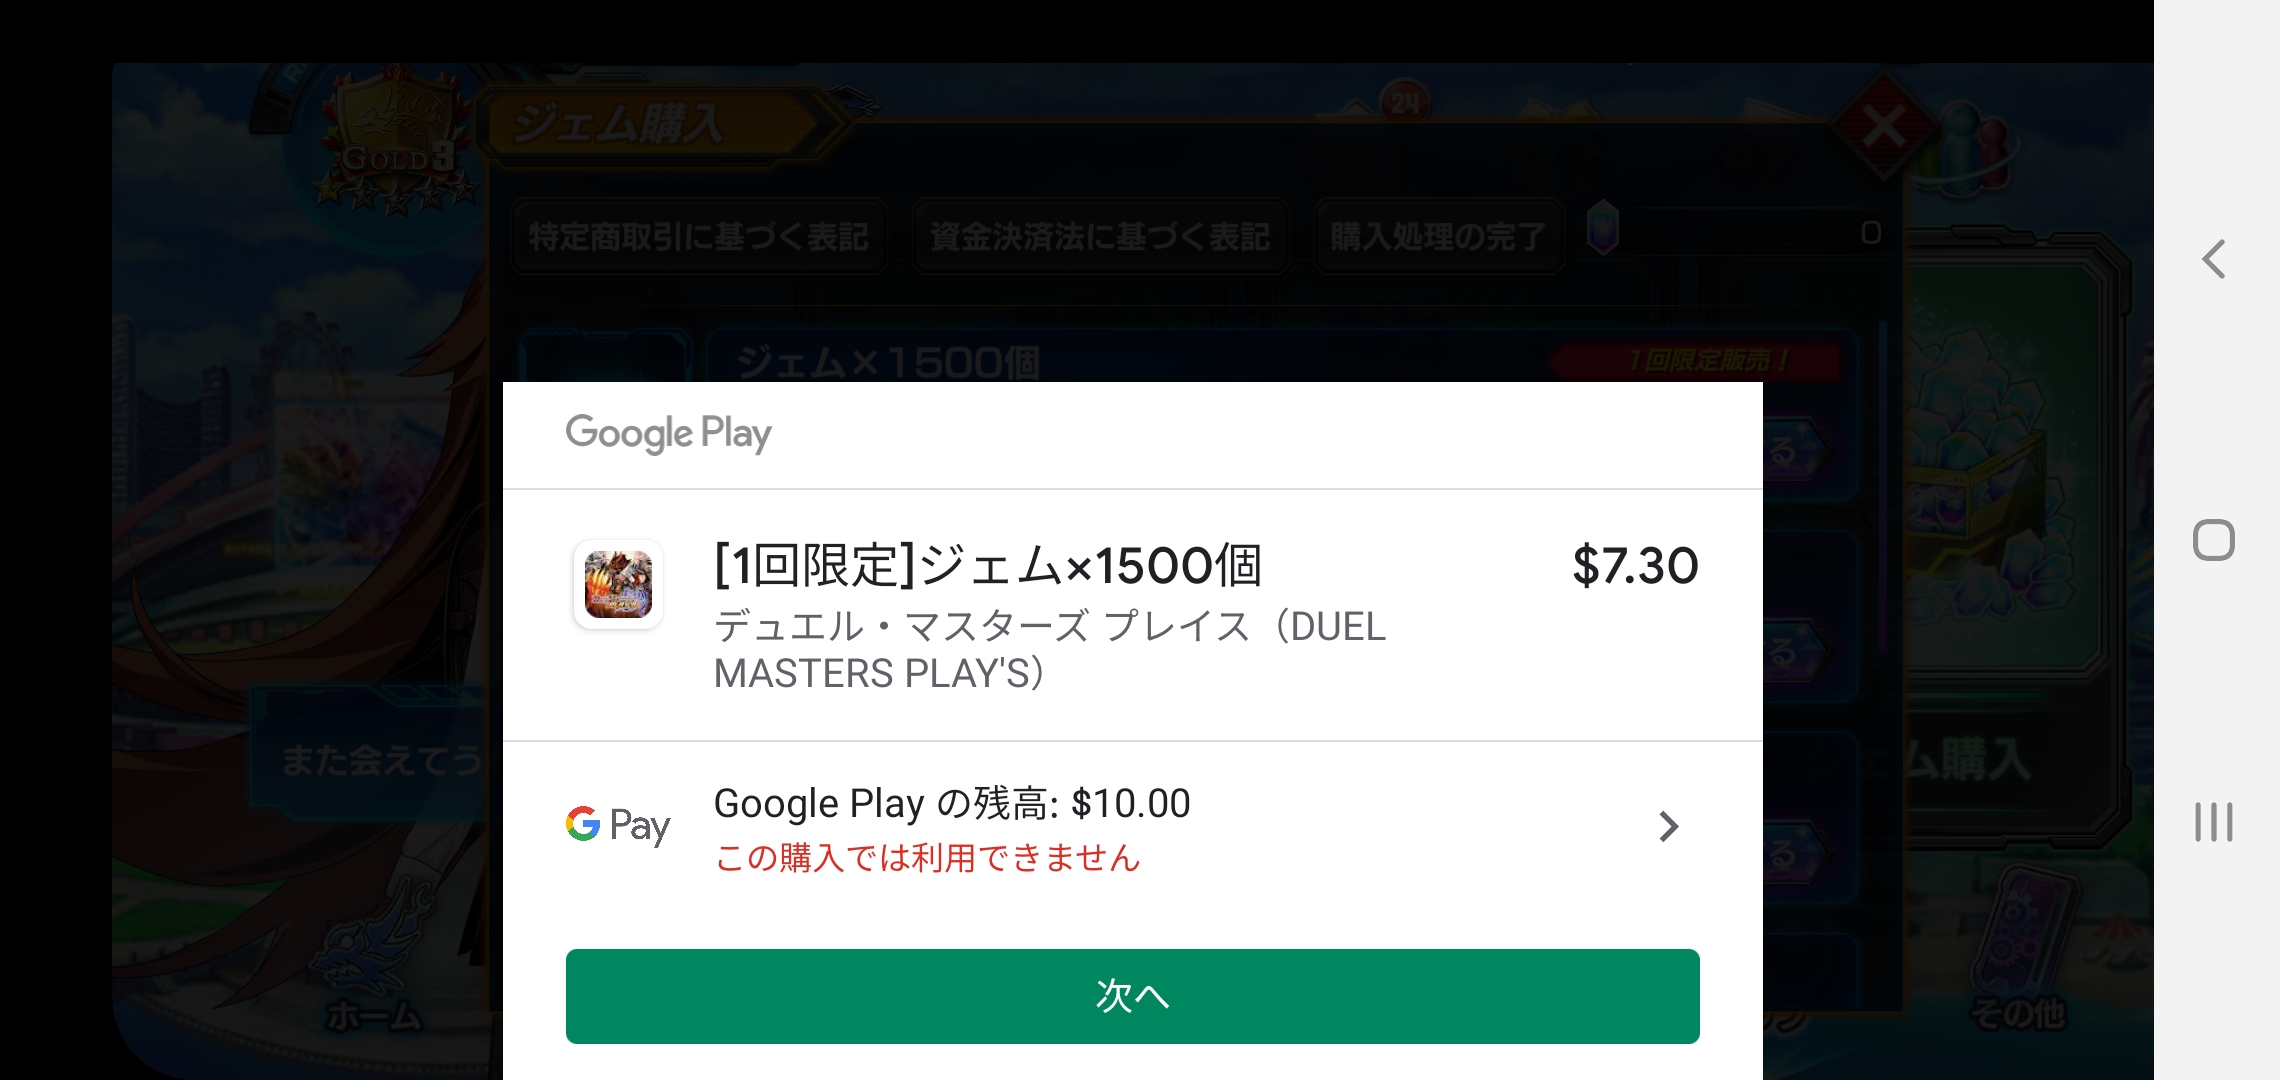 Google Play で購入できない - Google Play コミュニティ